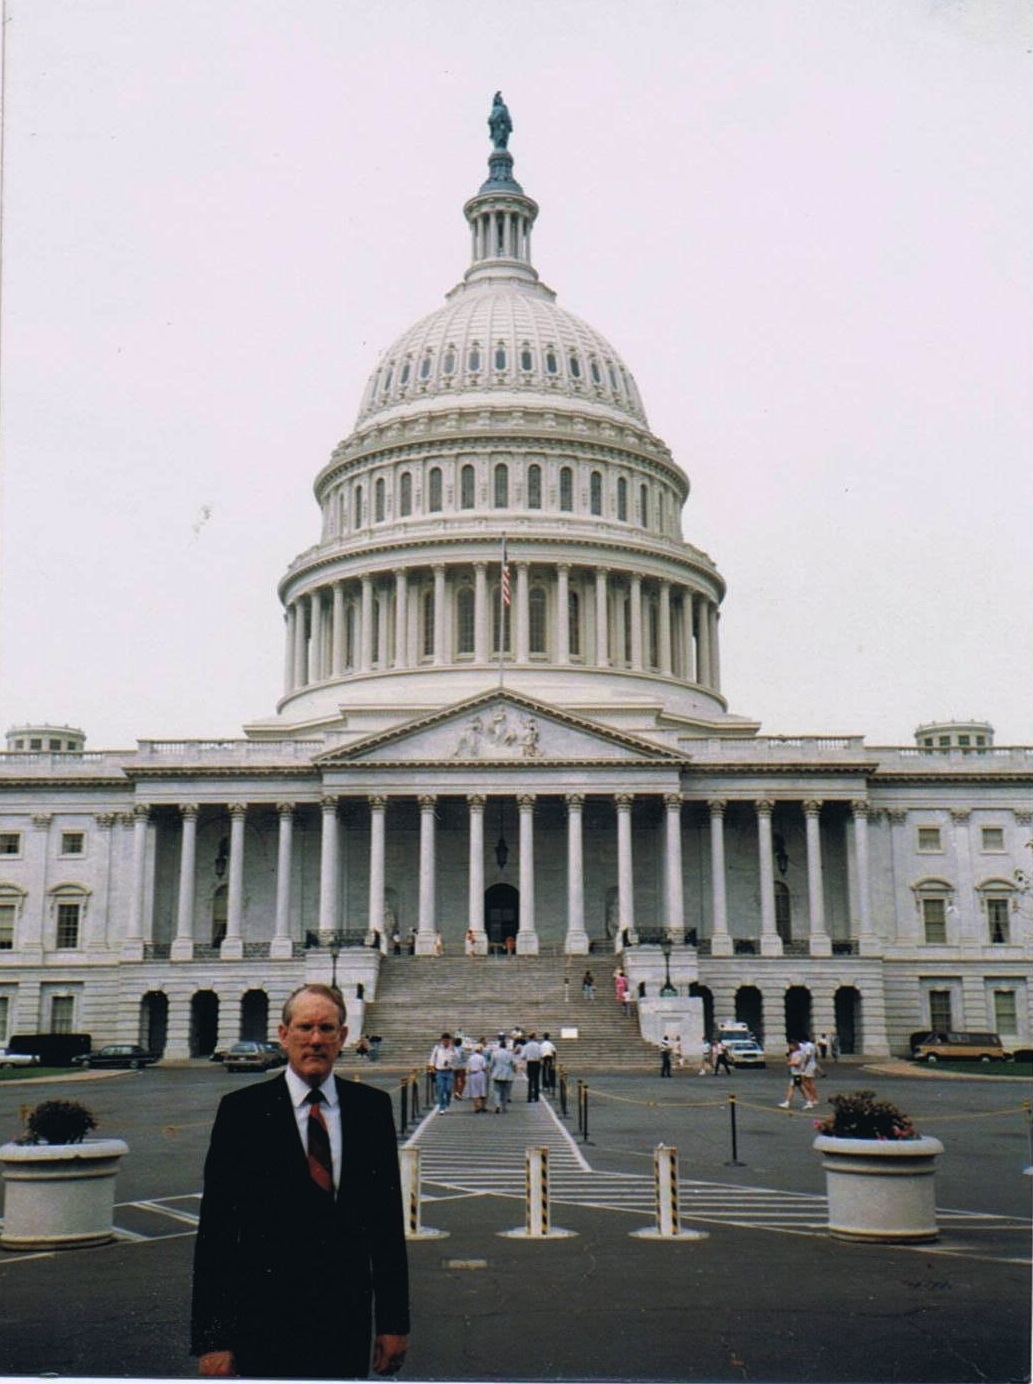 Image of Charles in Washington.